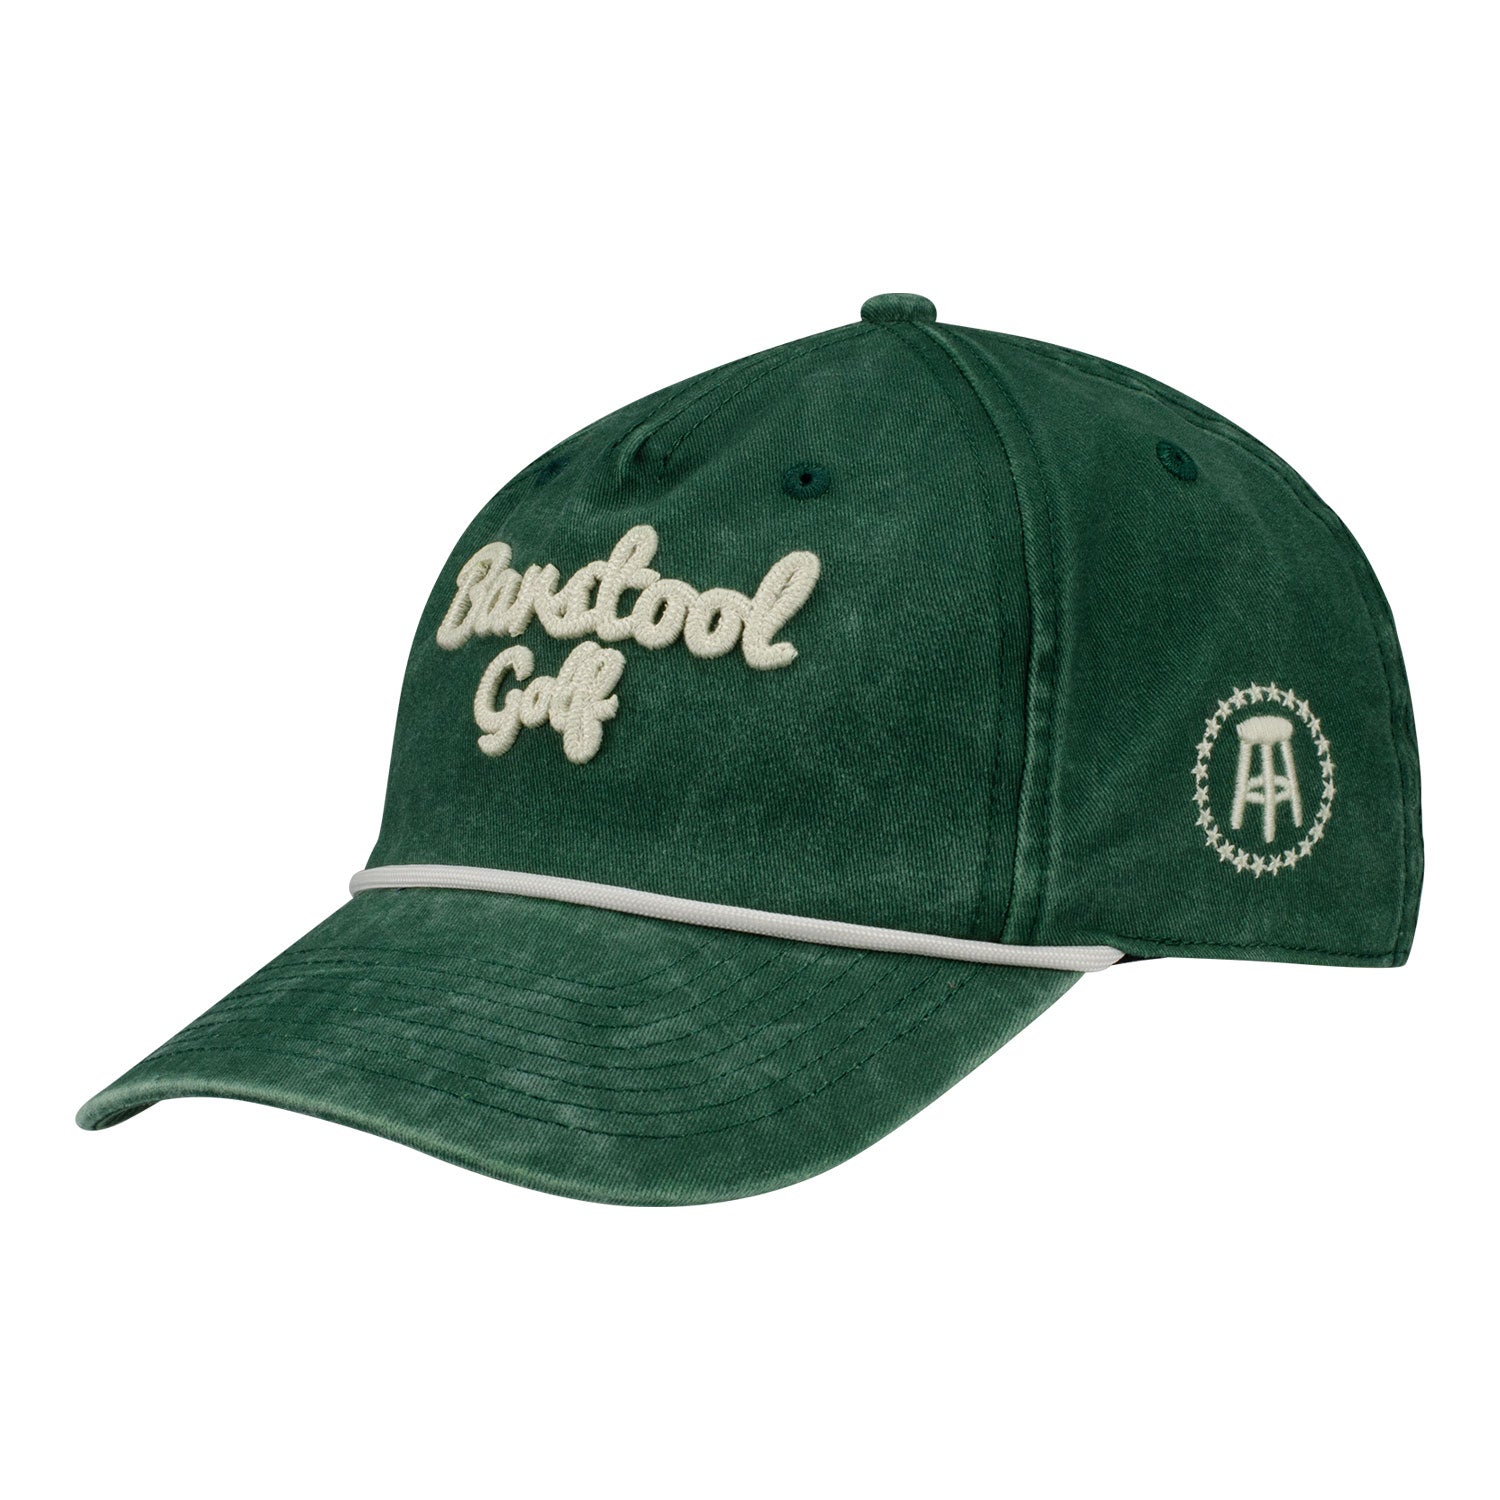 Barstool Golf LPGA Vintage Hat in Green - Angled Left Side View